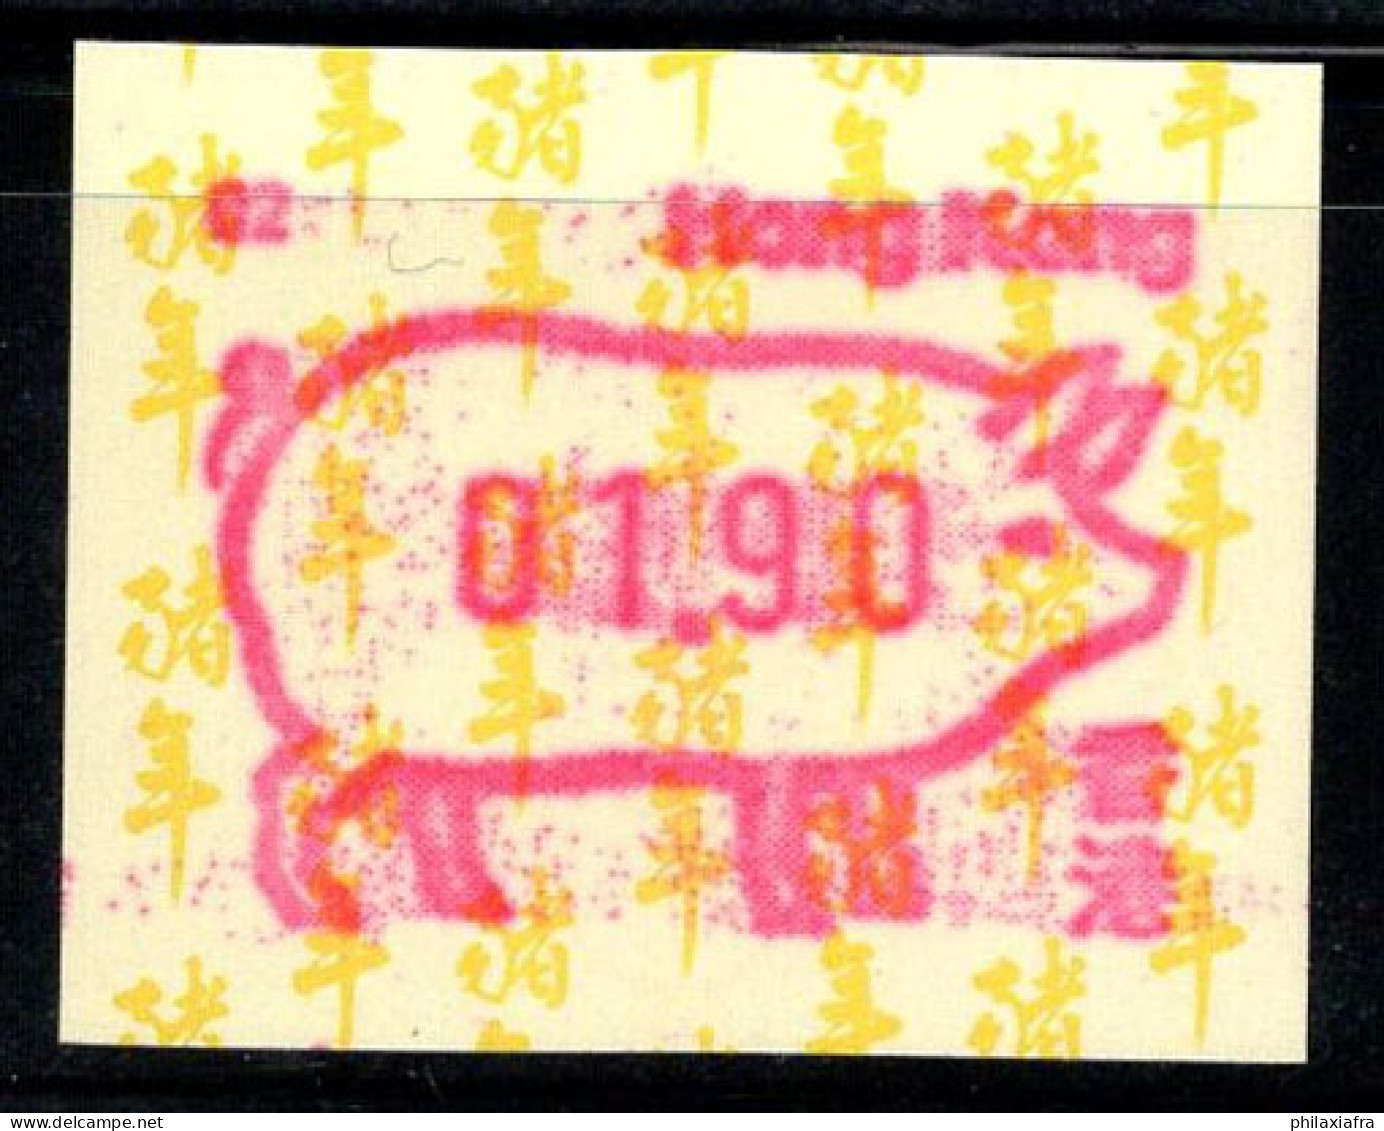 Hong Kong 1995 Mi. 10 Neuf ** 100% ATM 01.90, Porc - Distributors